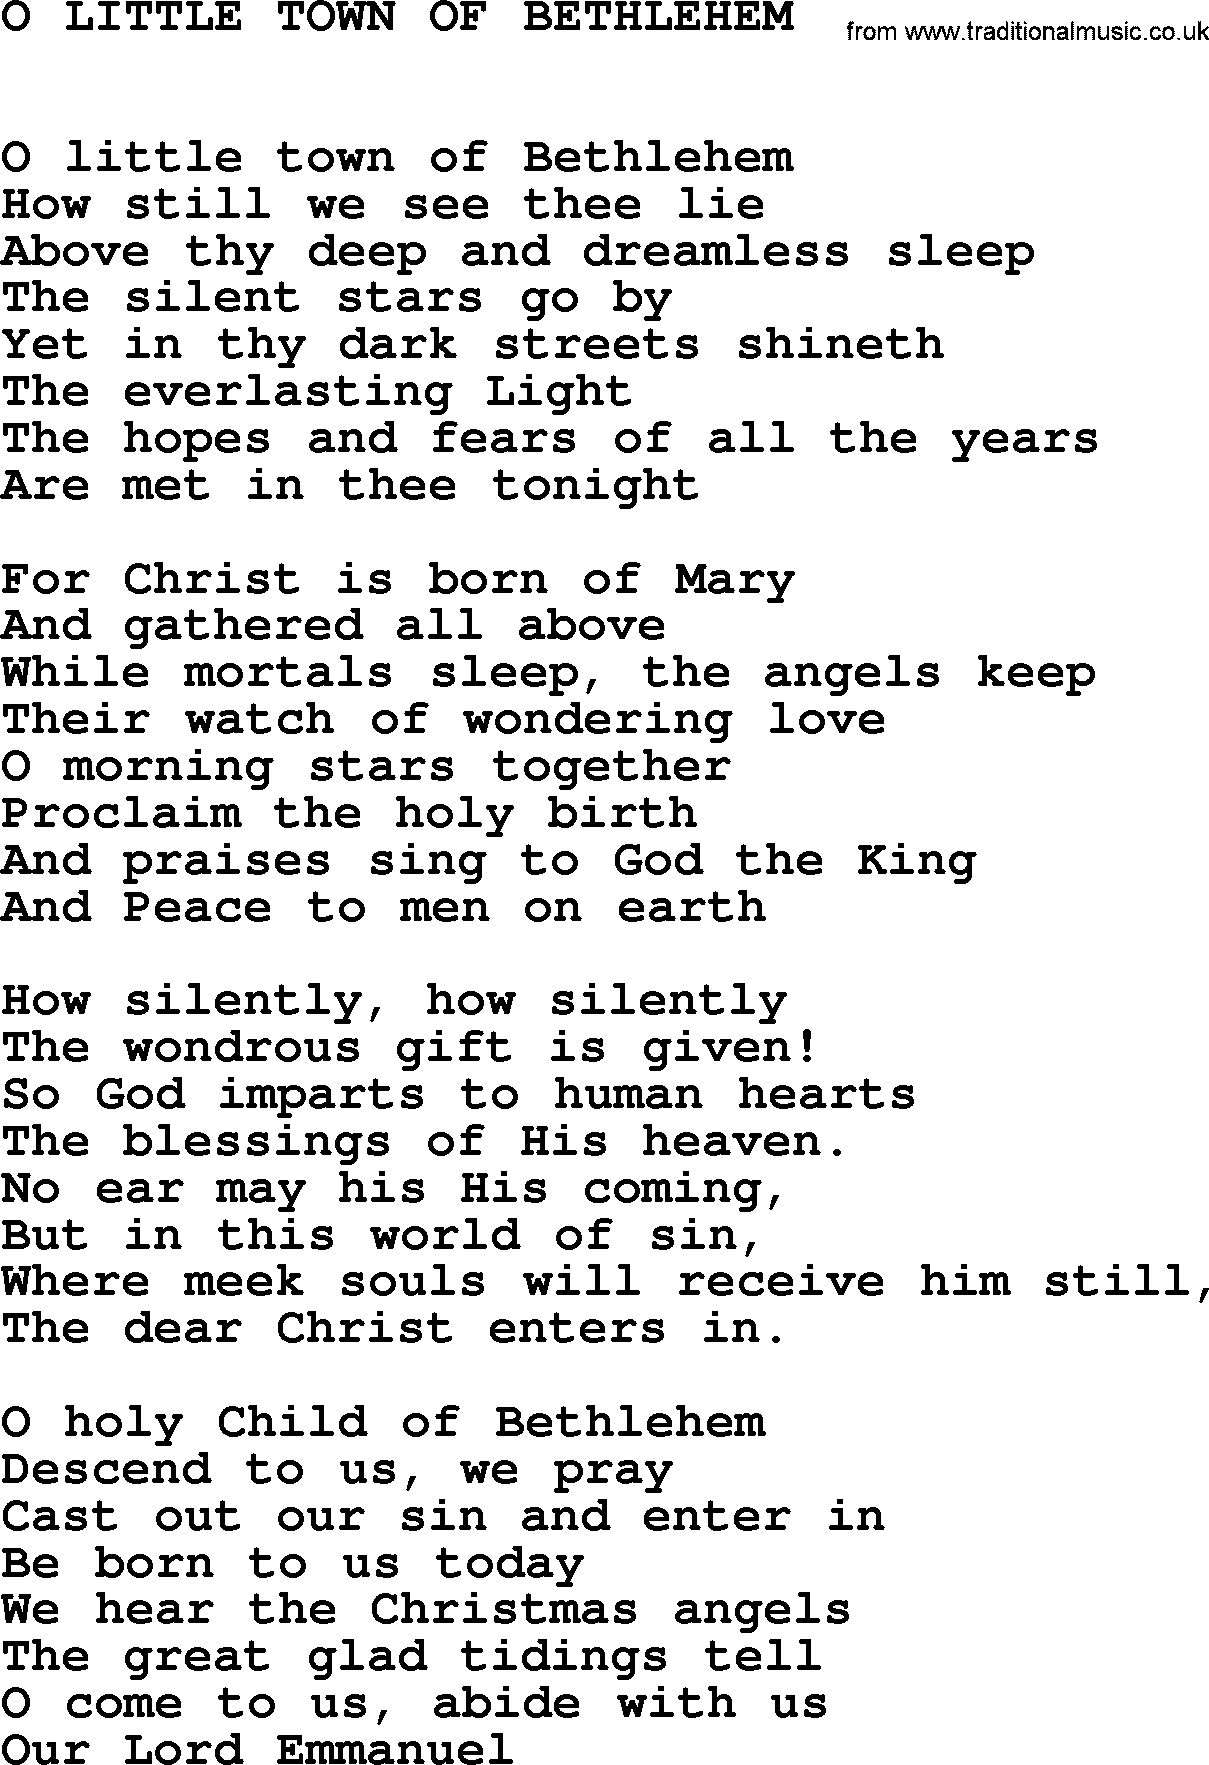 Johnny Cash song O Little Town Of Bethlehem.txt lyrics